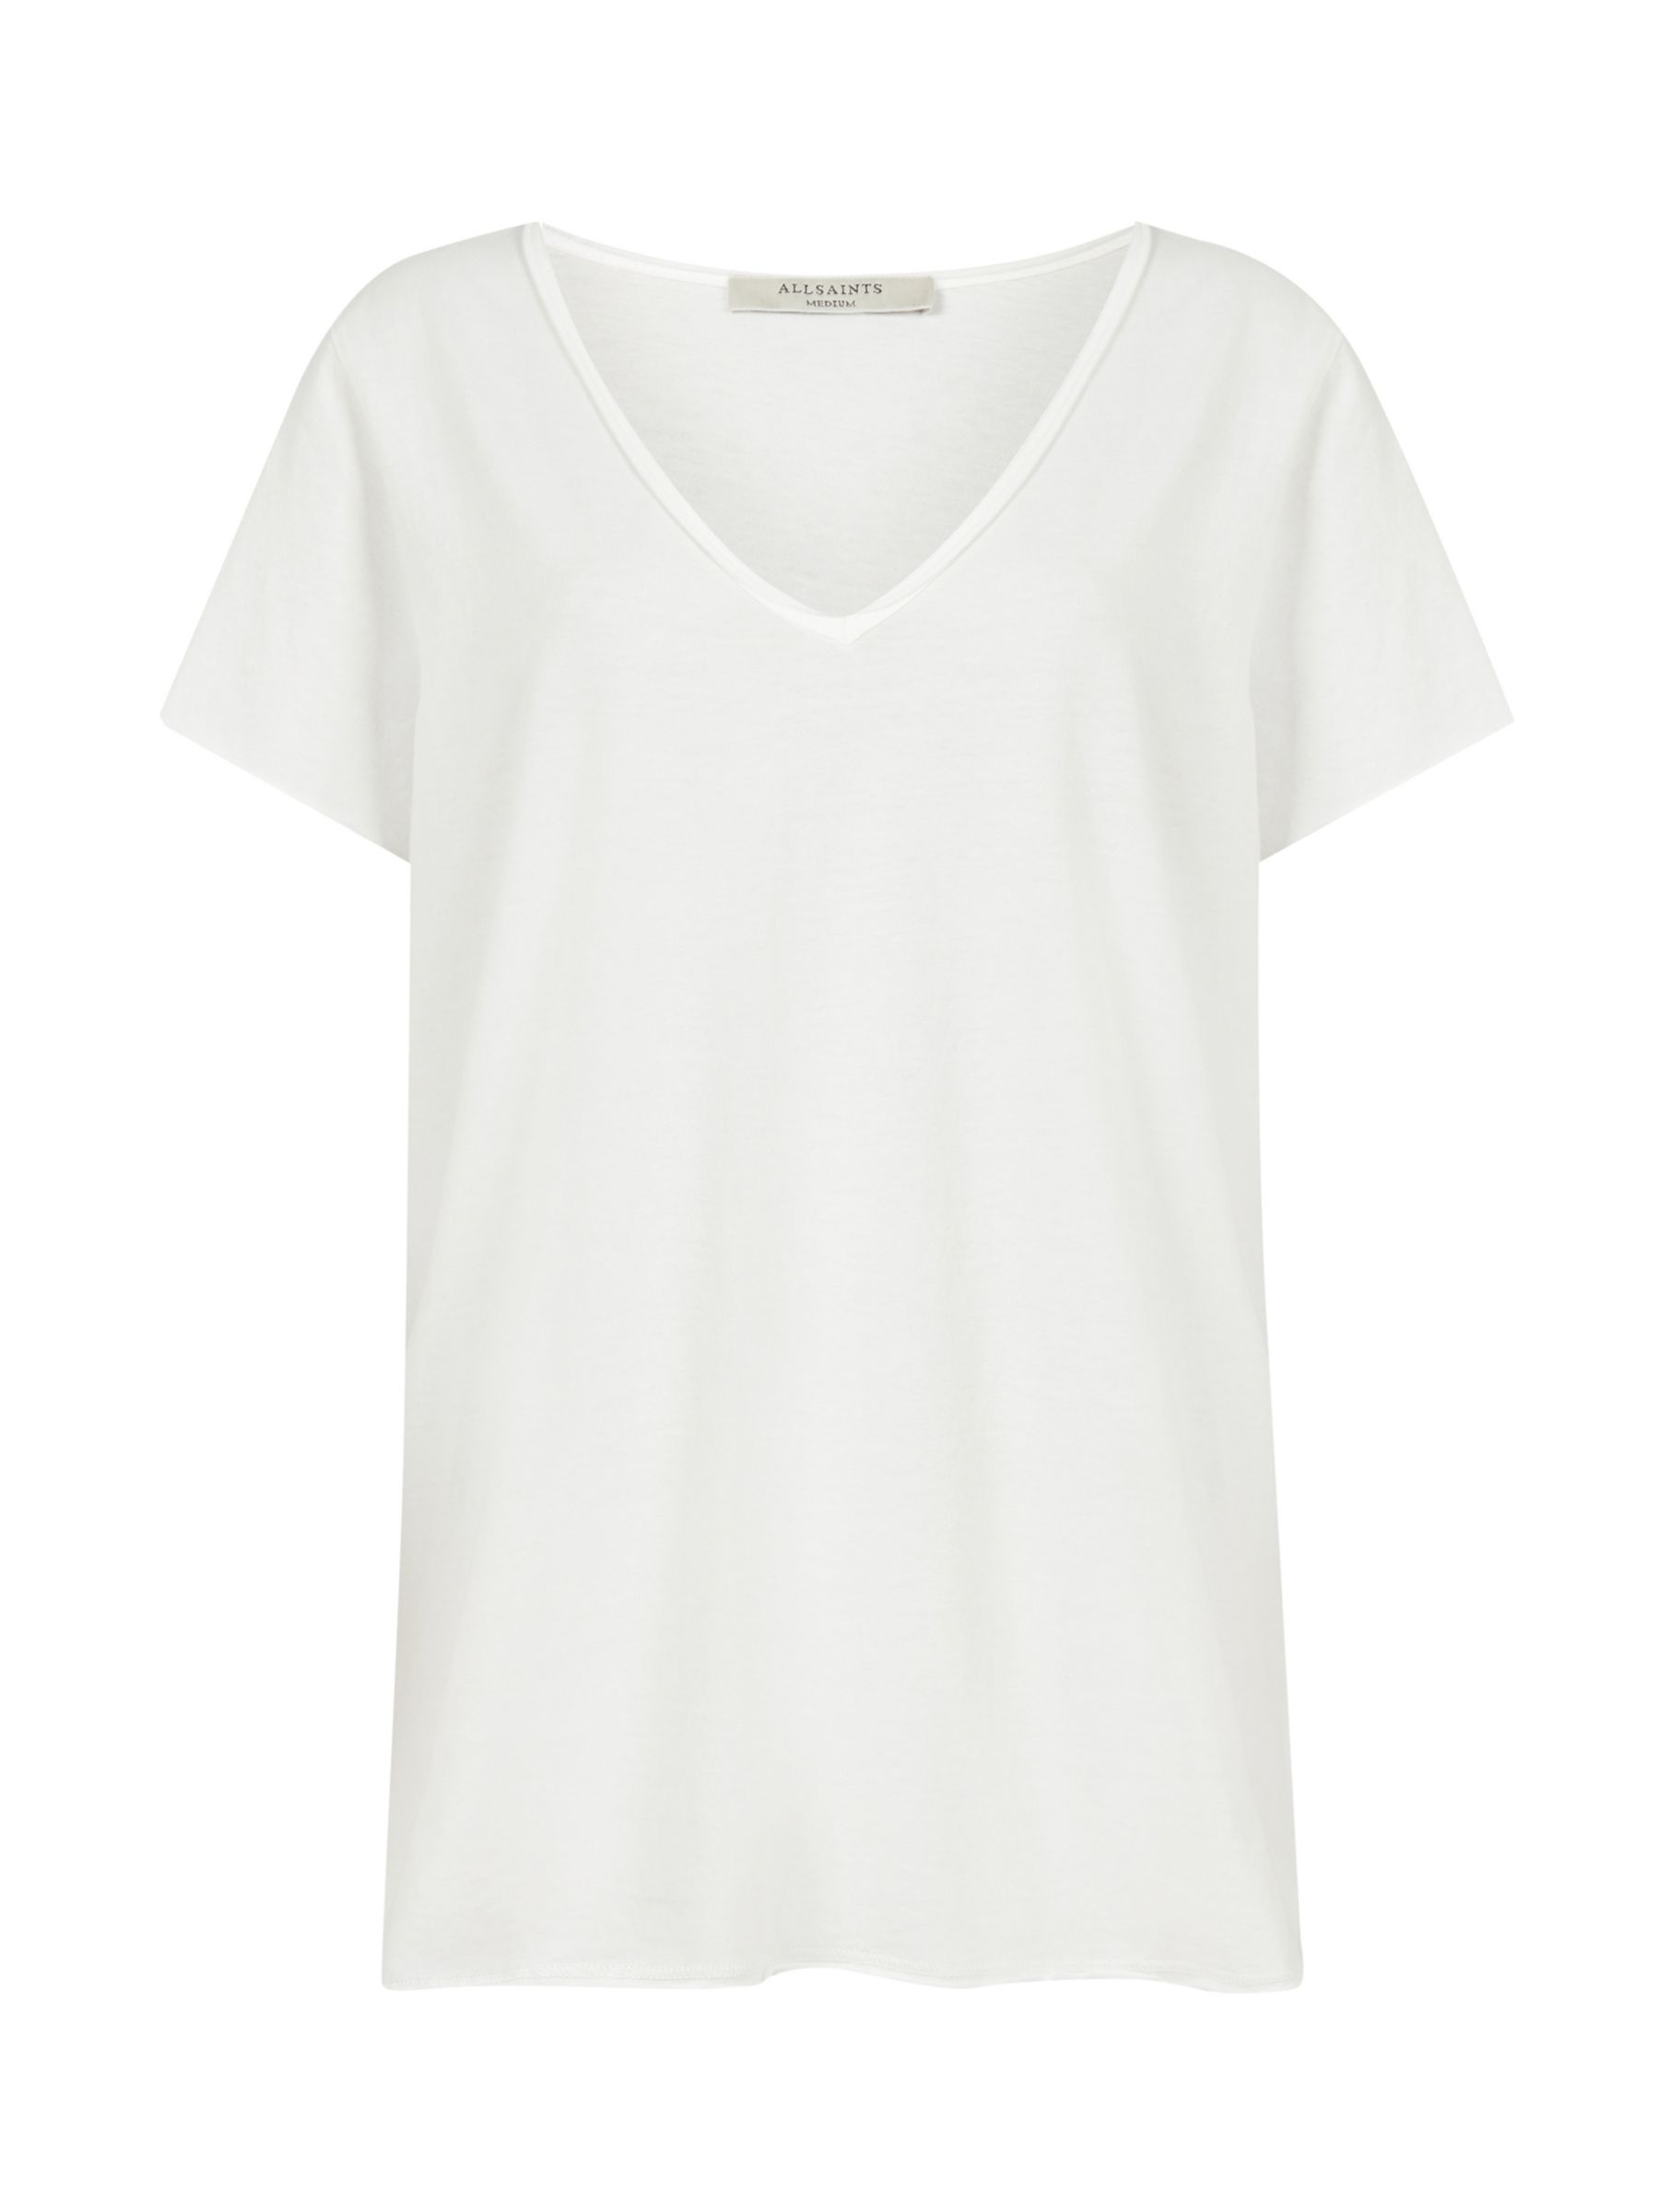 Buy AllSaints Emelyn Tonic T-Shirt Online at johnlewis.com